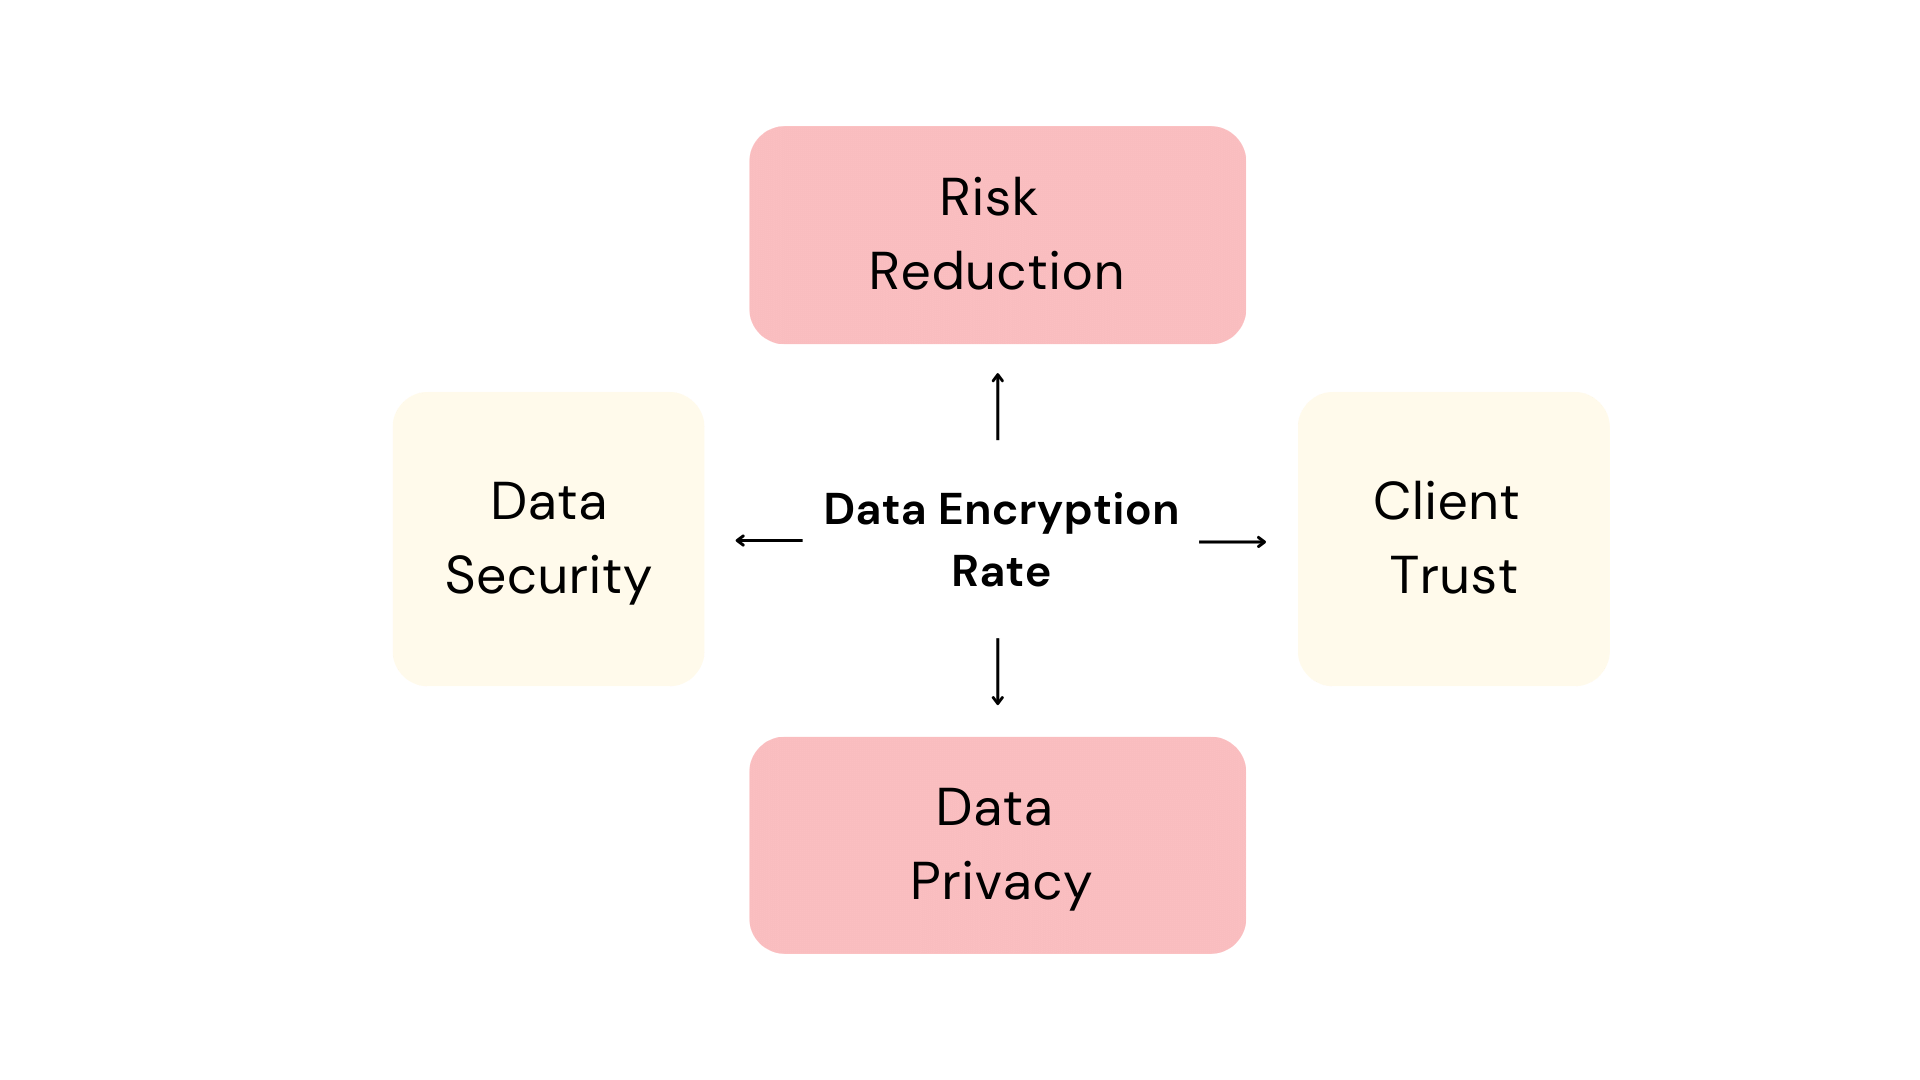 Data encryption rate